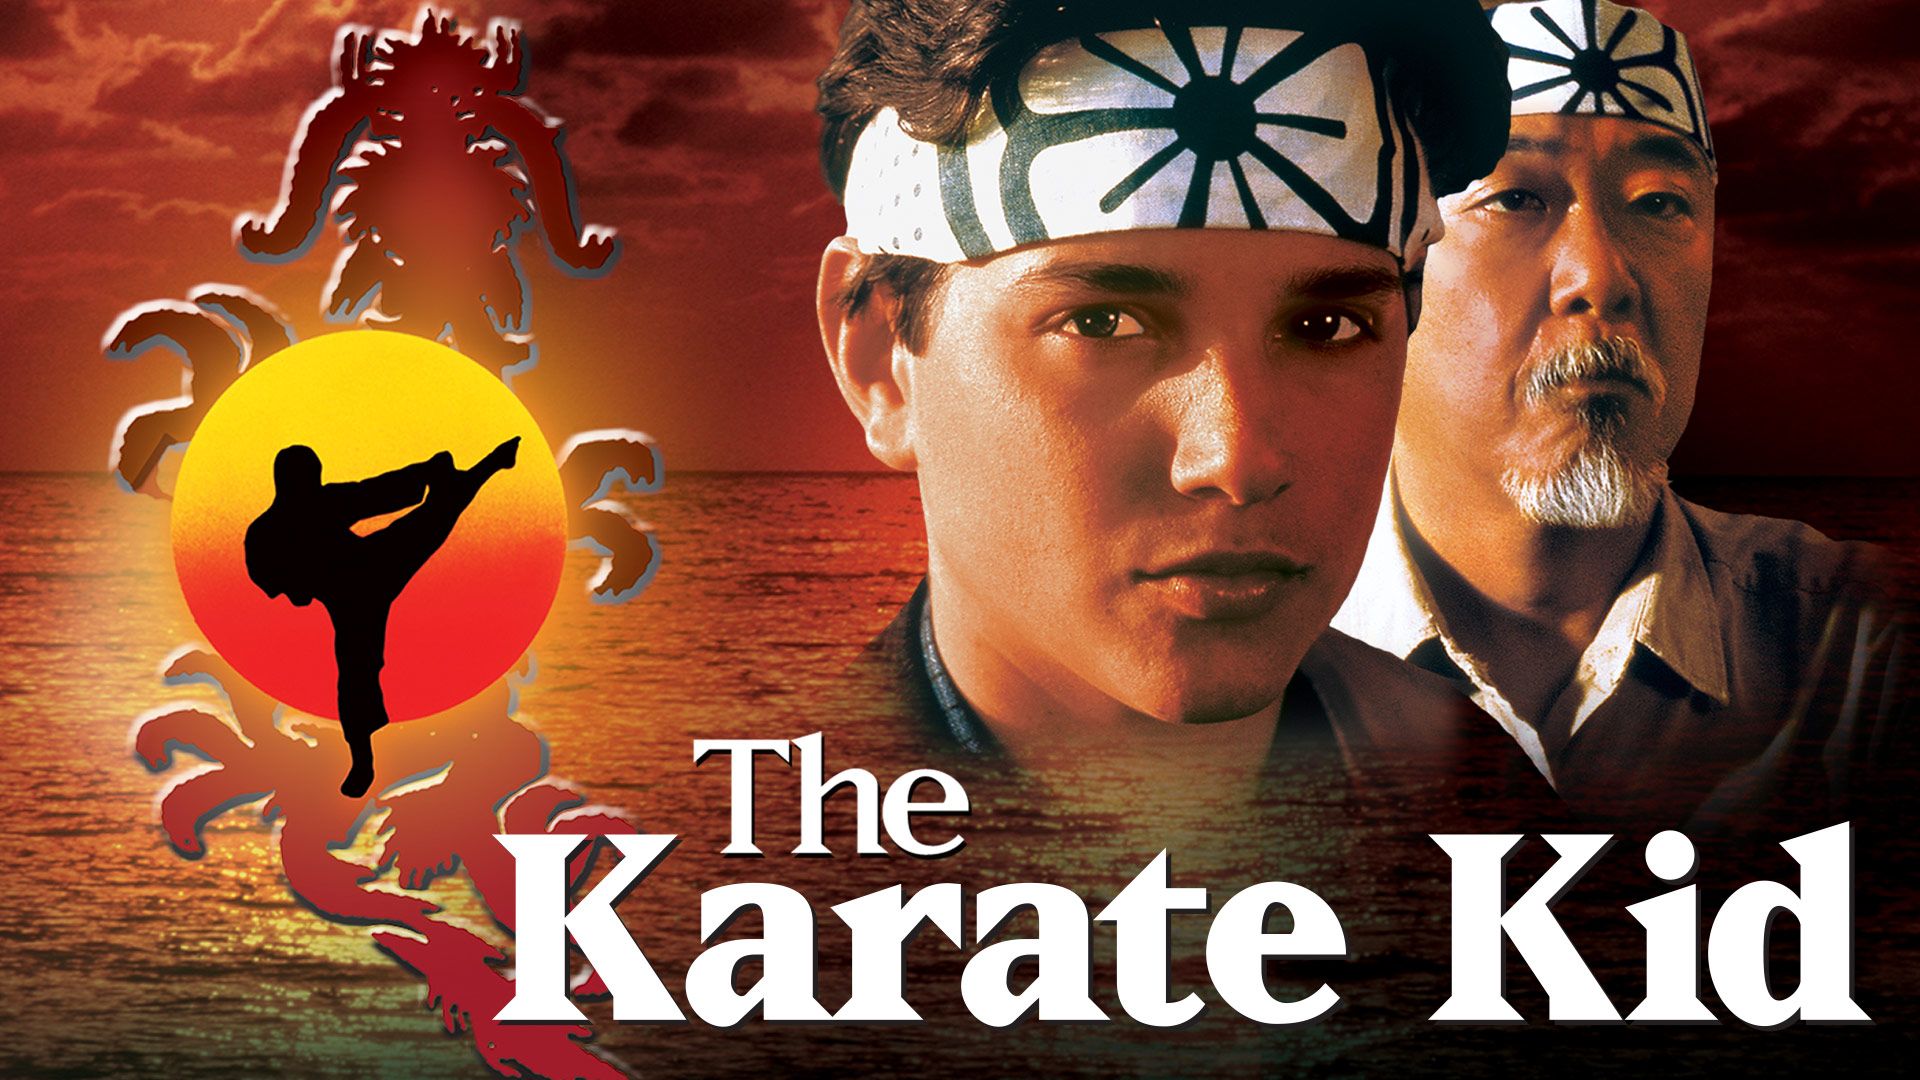 Watch The Karate Kid Part II